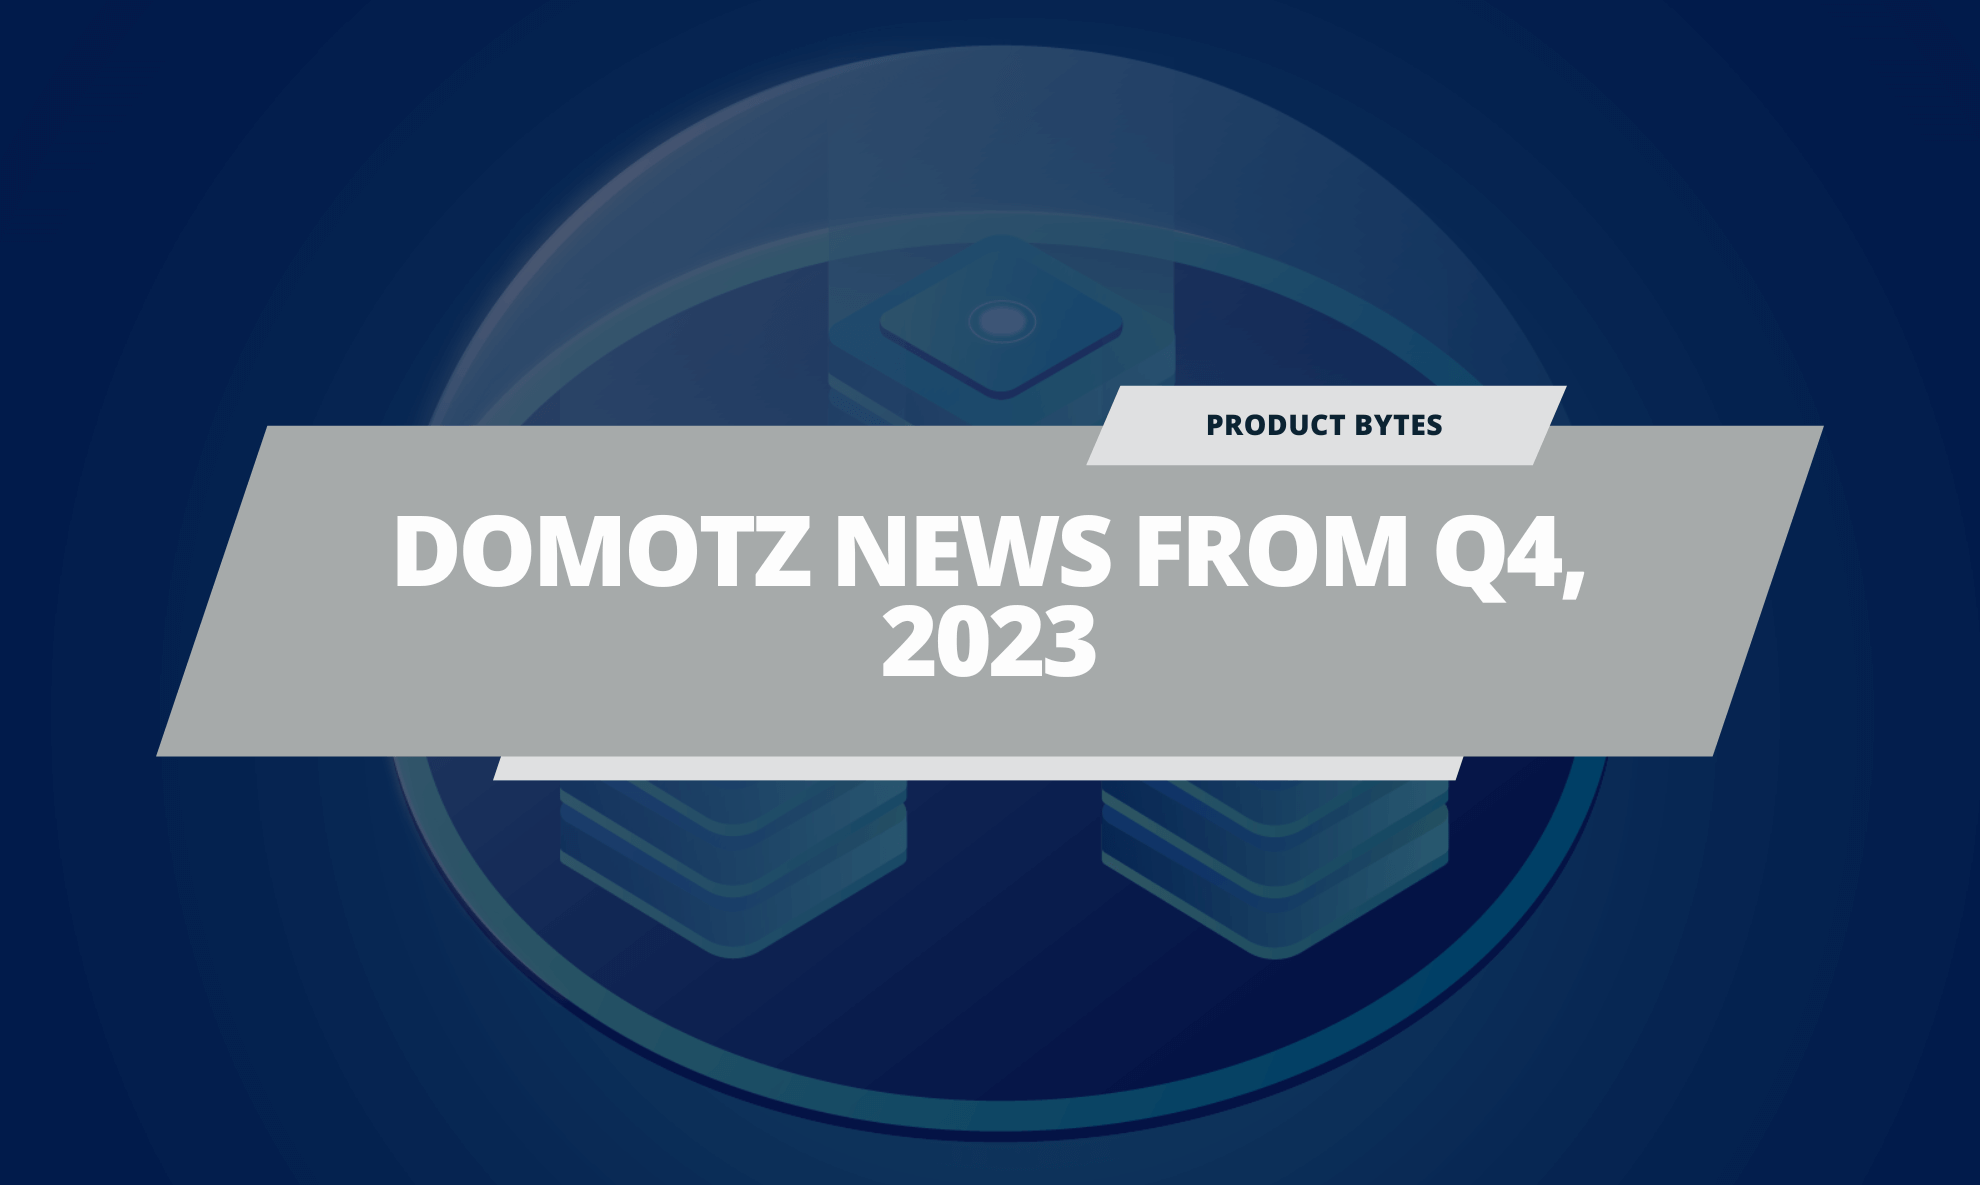 Domotz News From Q4 (October to December) 2023